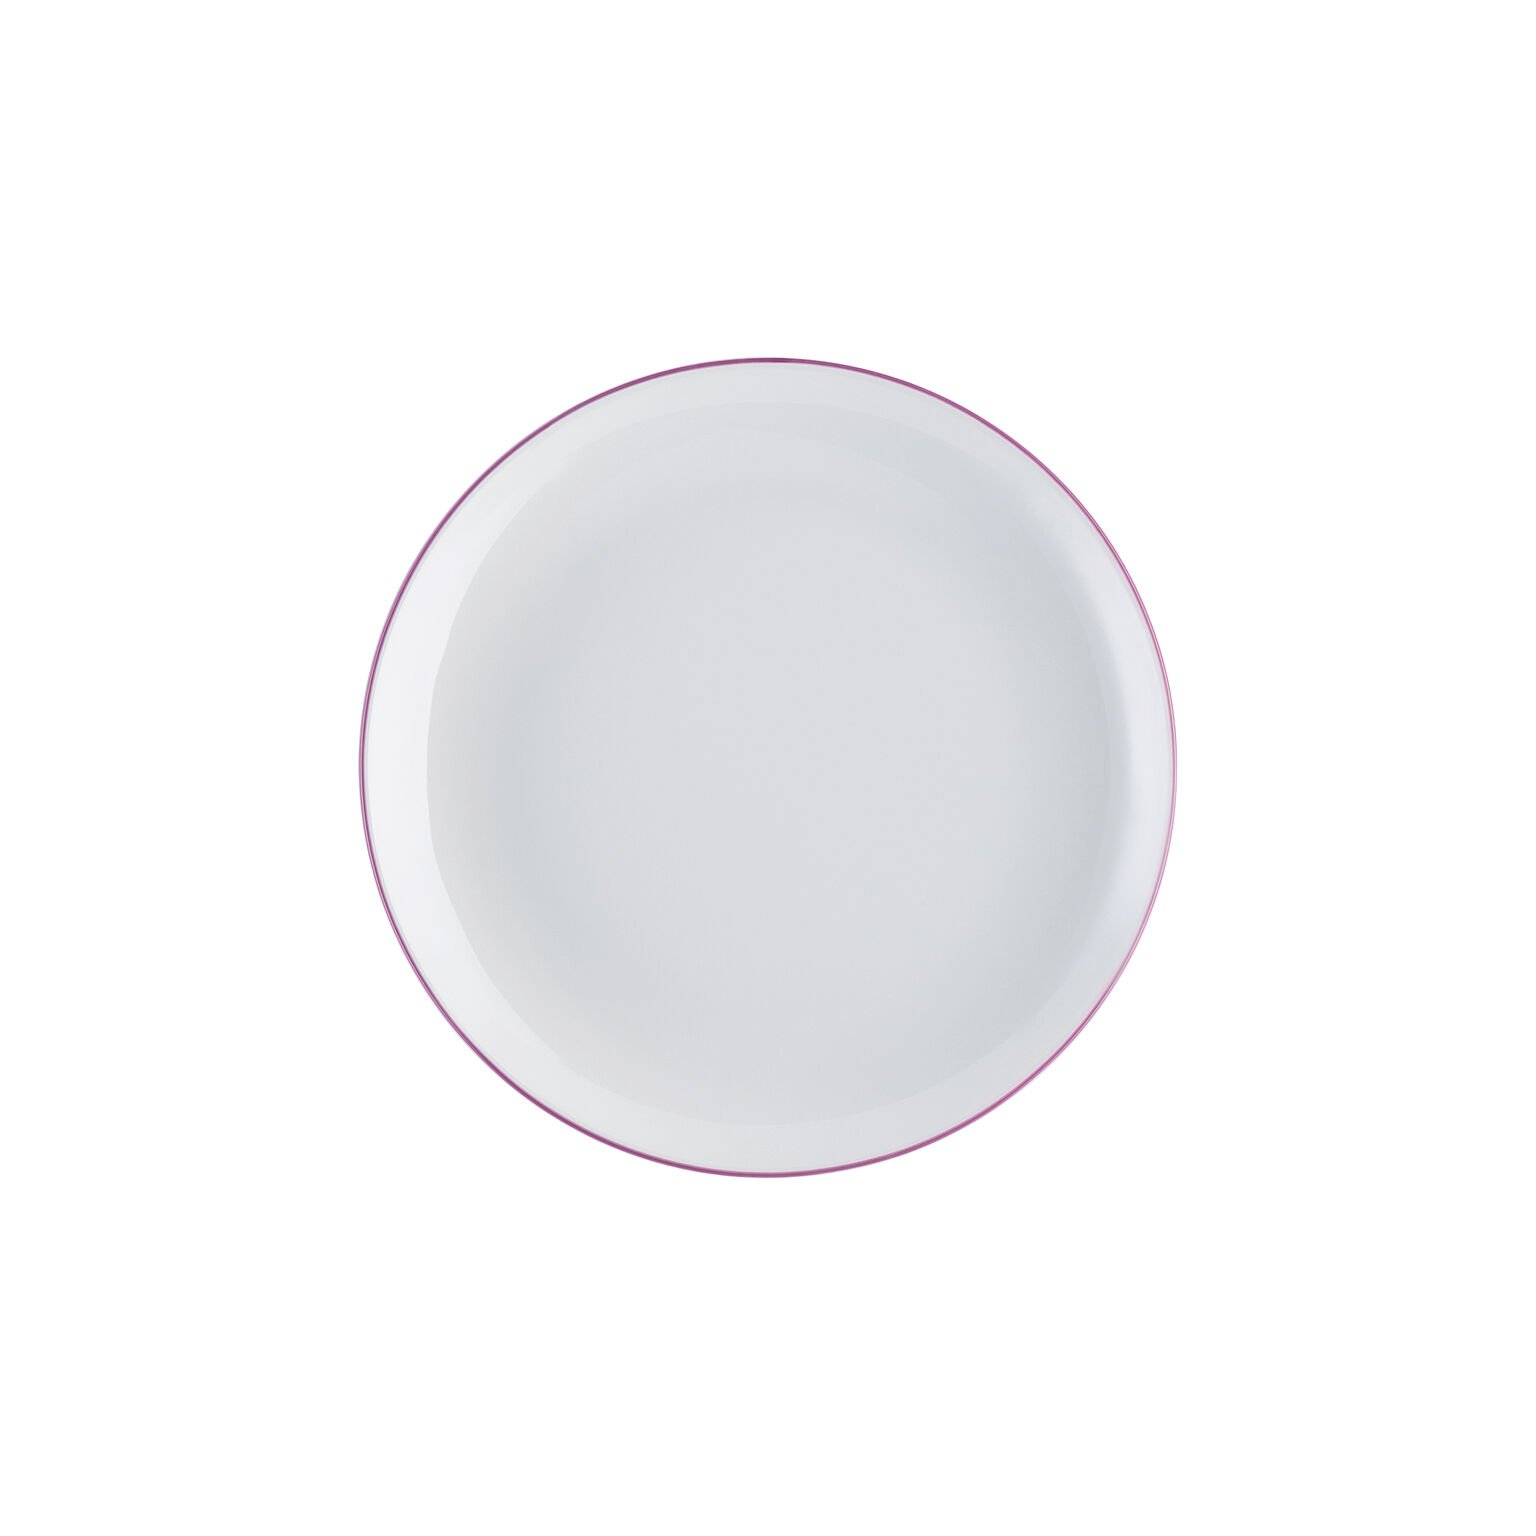 Plates | Arzberg Porcelain Online Shop